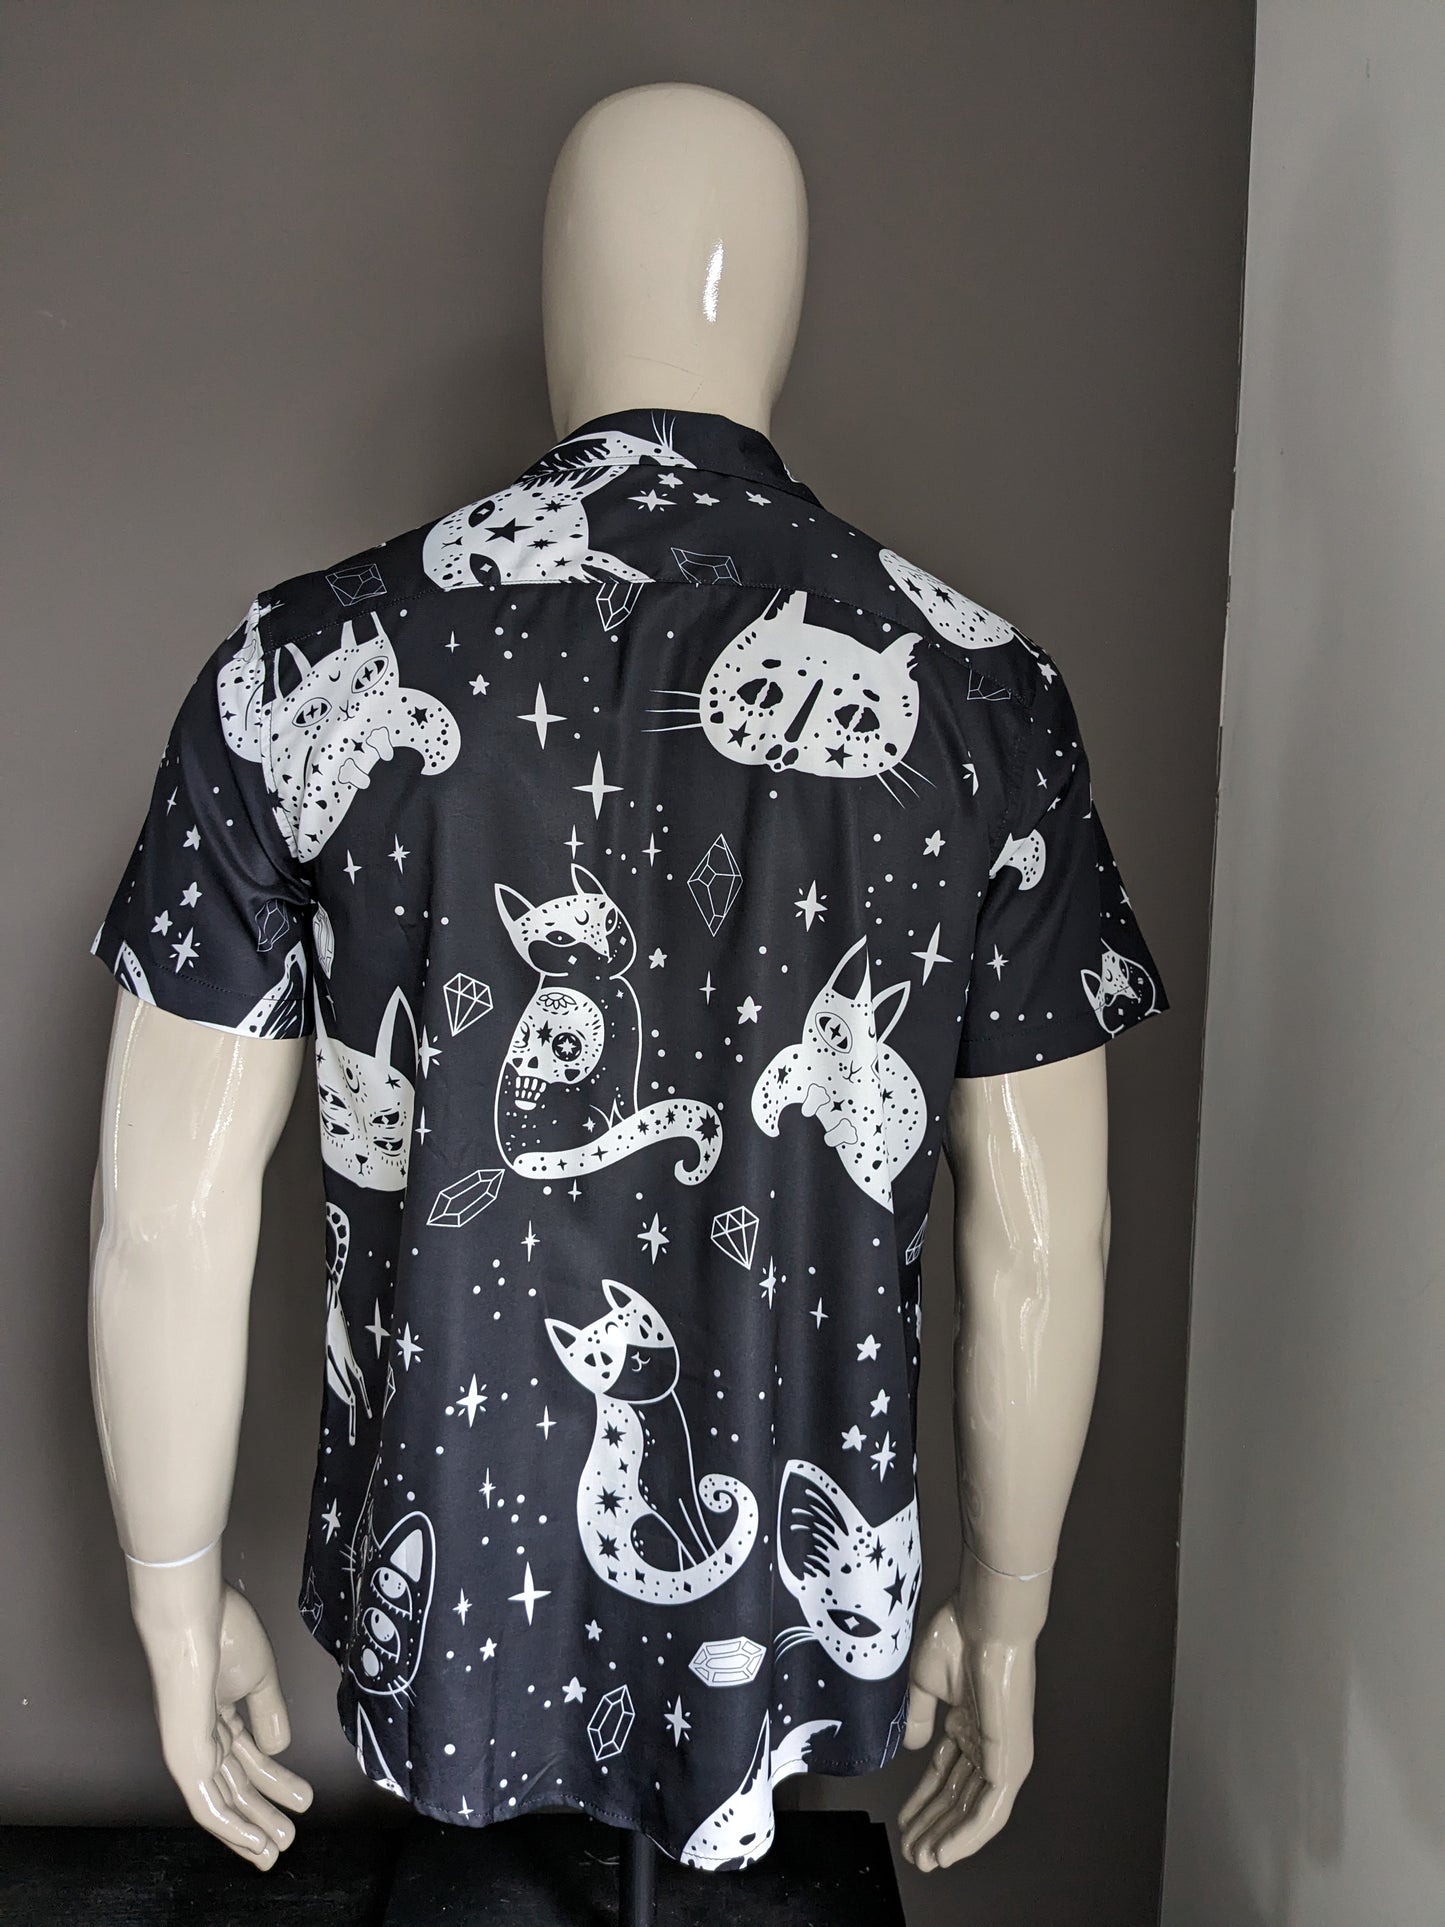 Brandless shirt short sleeve. Galaxy cats print. Black and white. Size L.